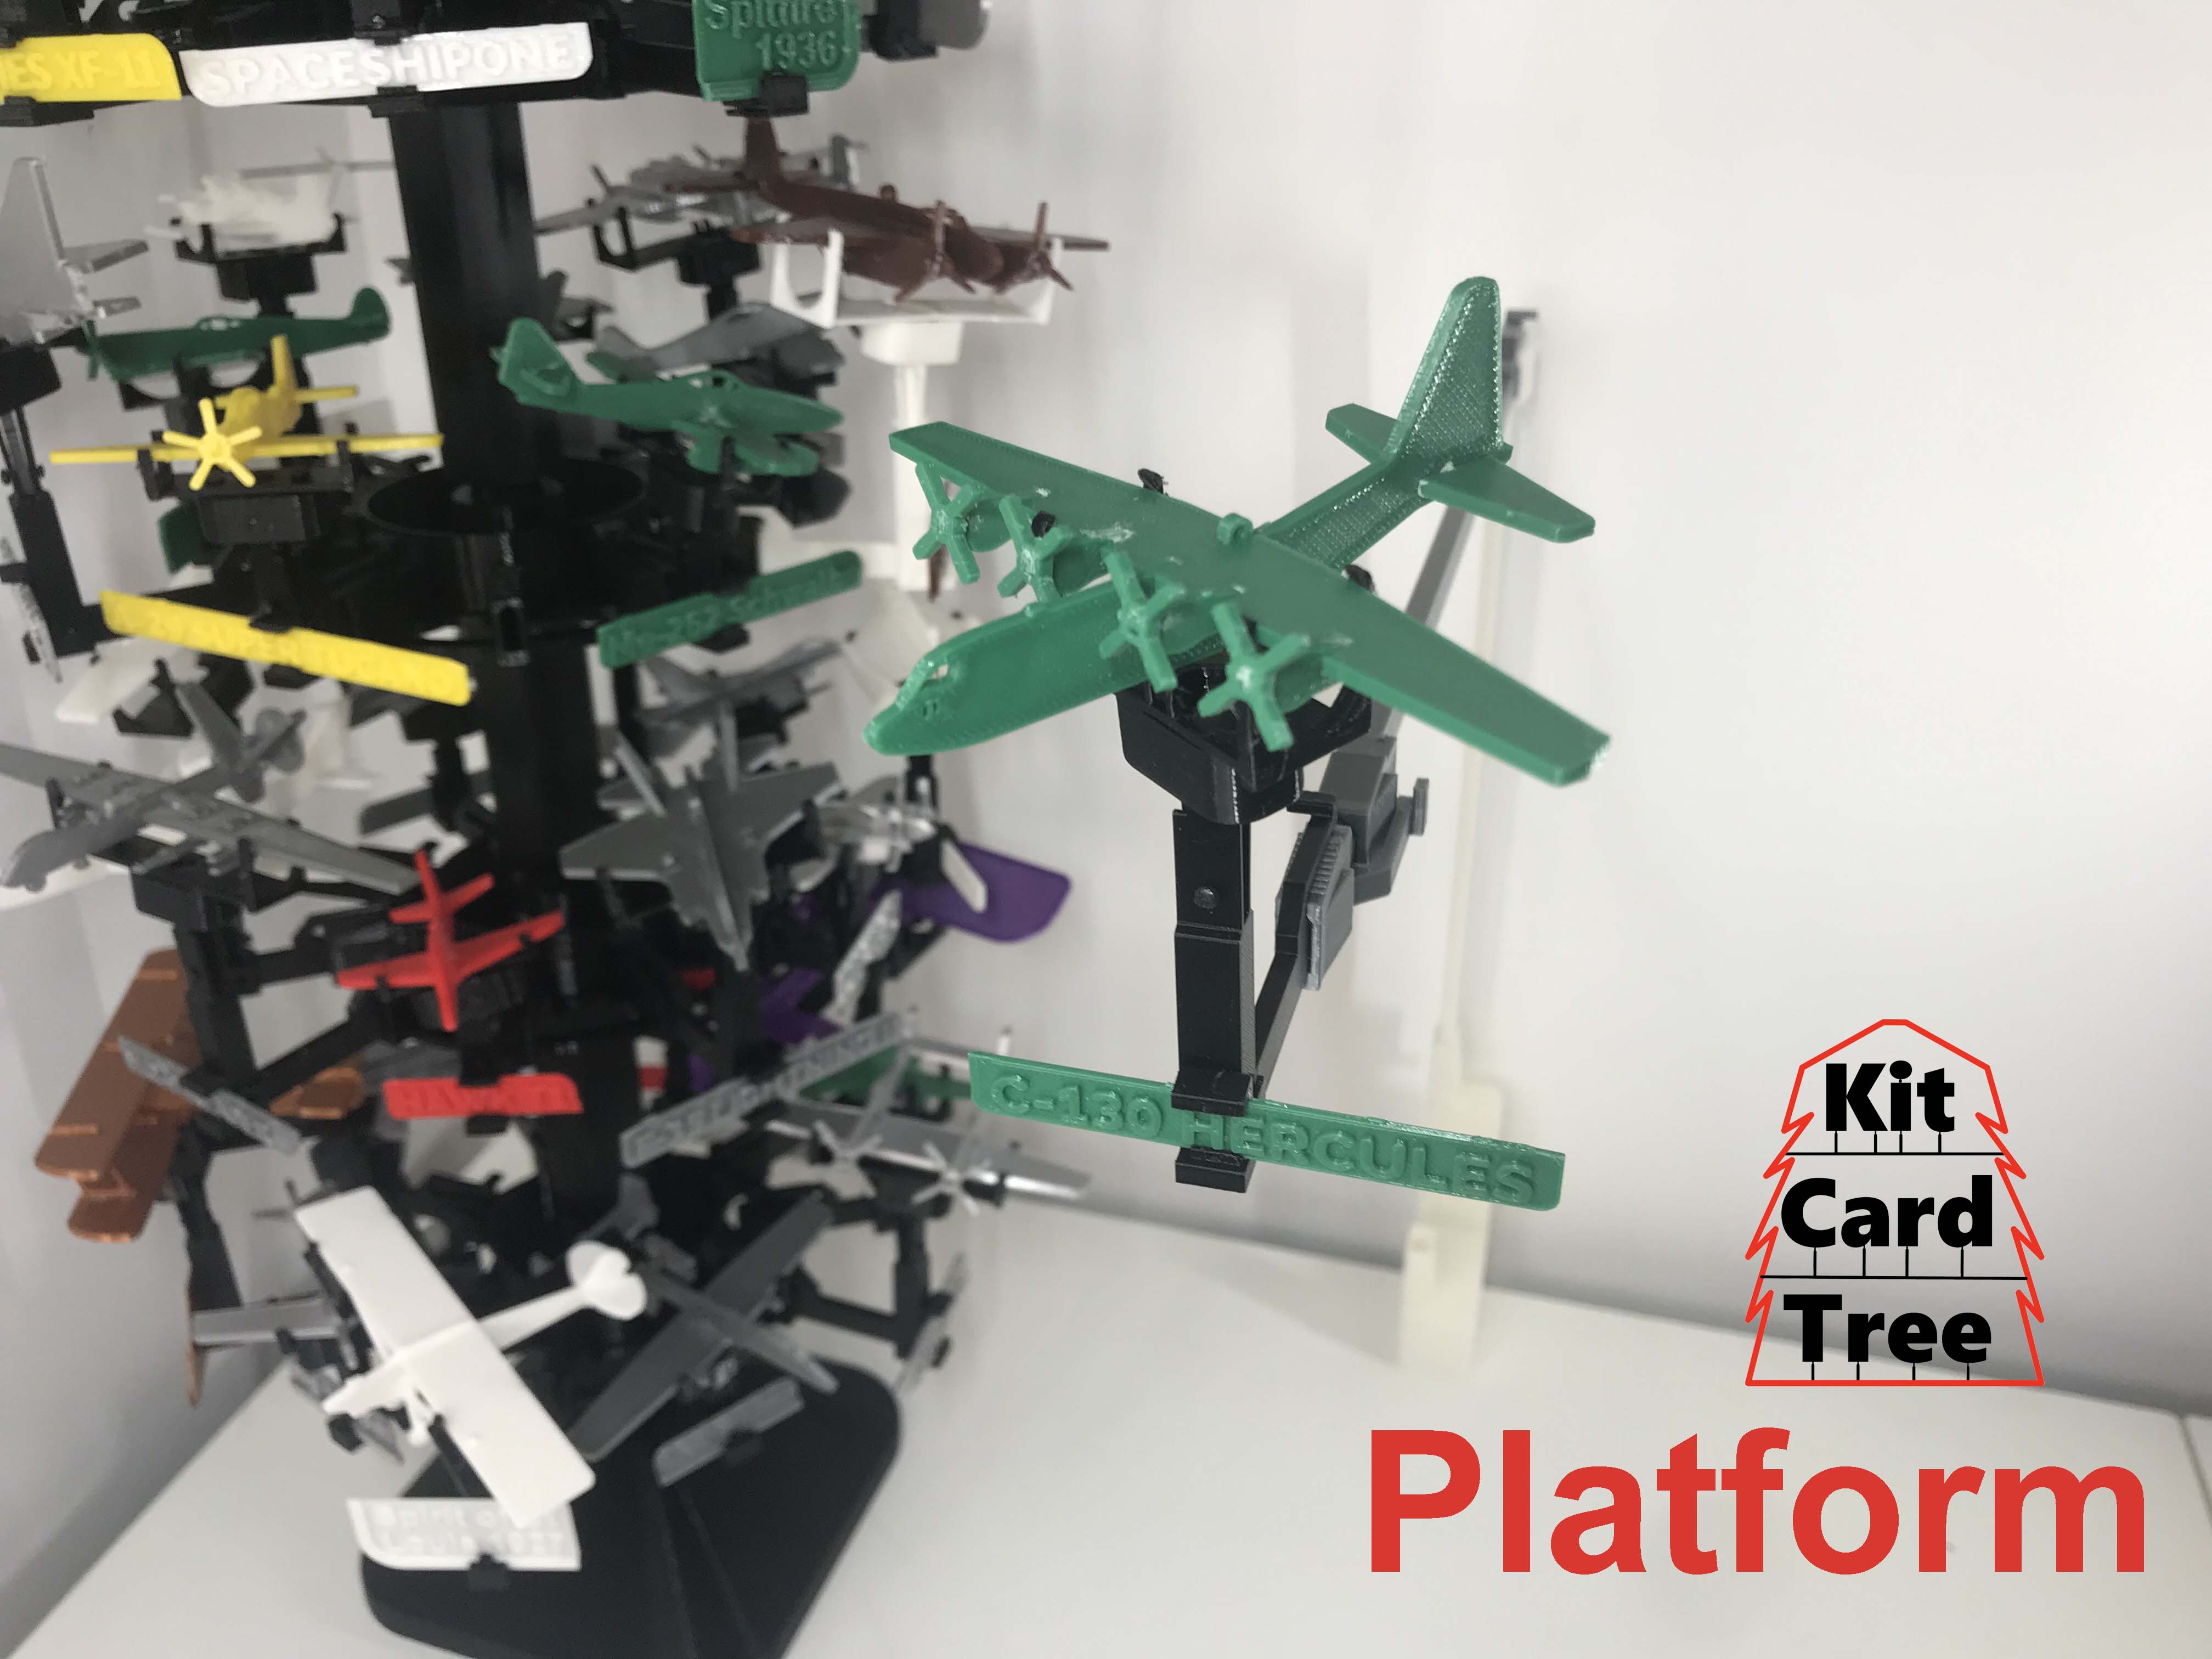 Kit Card Tree platform for C-130 Hercules by Nakozen